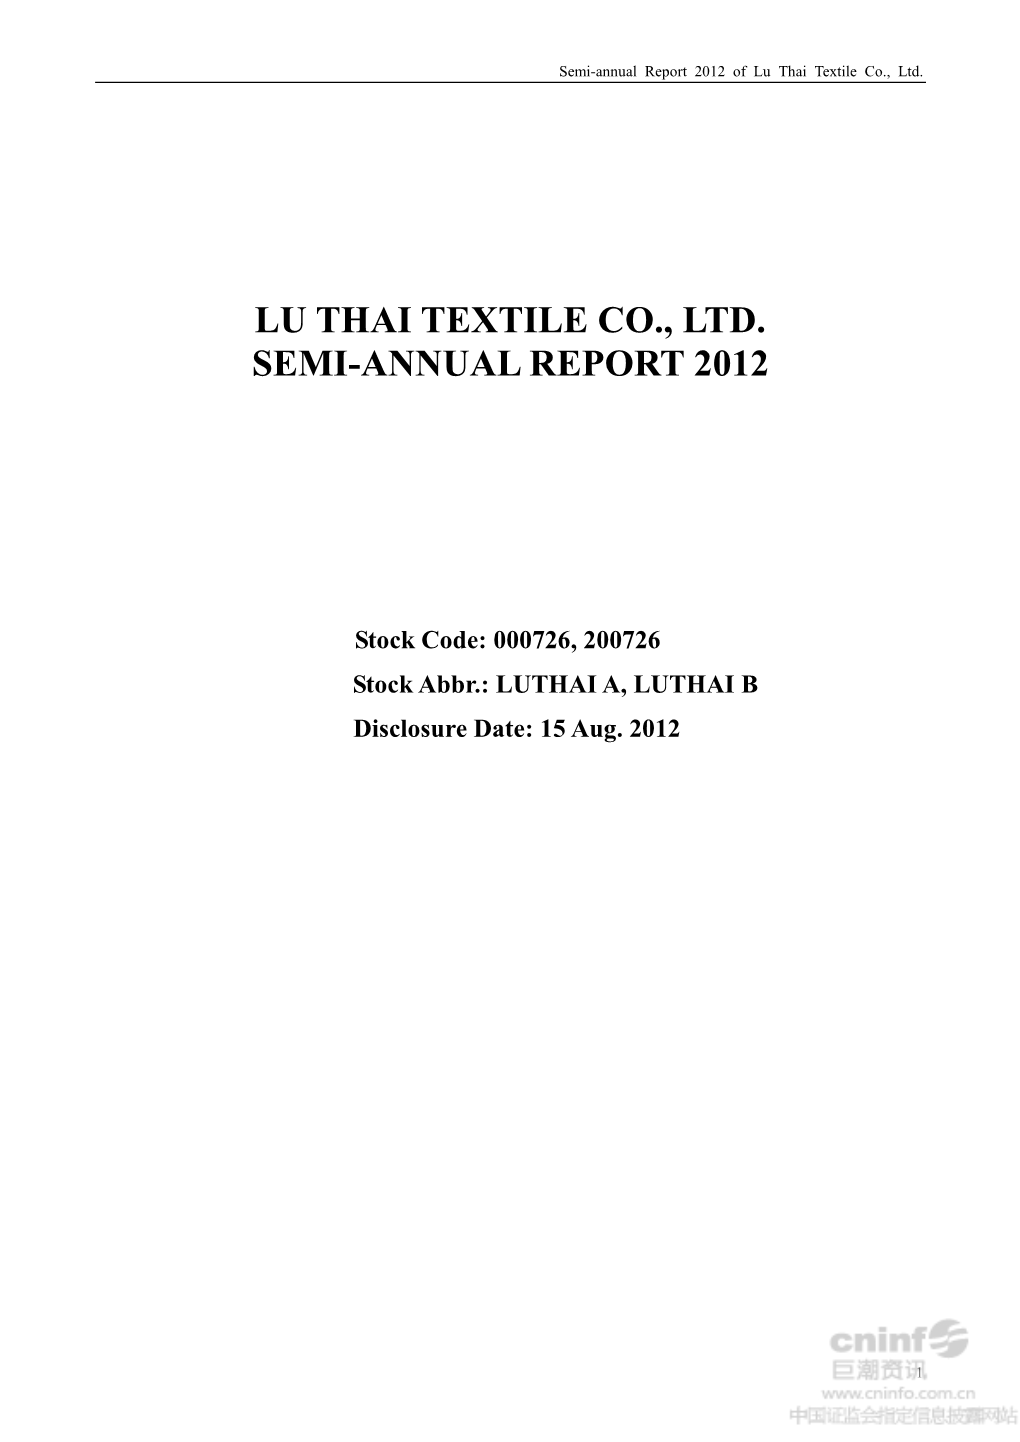 Lu Thai Textile Co., Ltd. Semi-Annual Report 2012